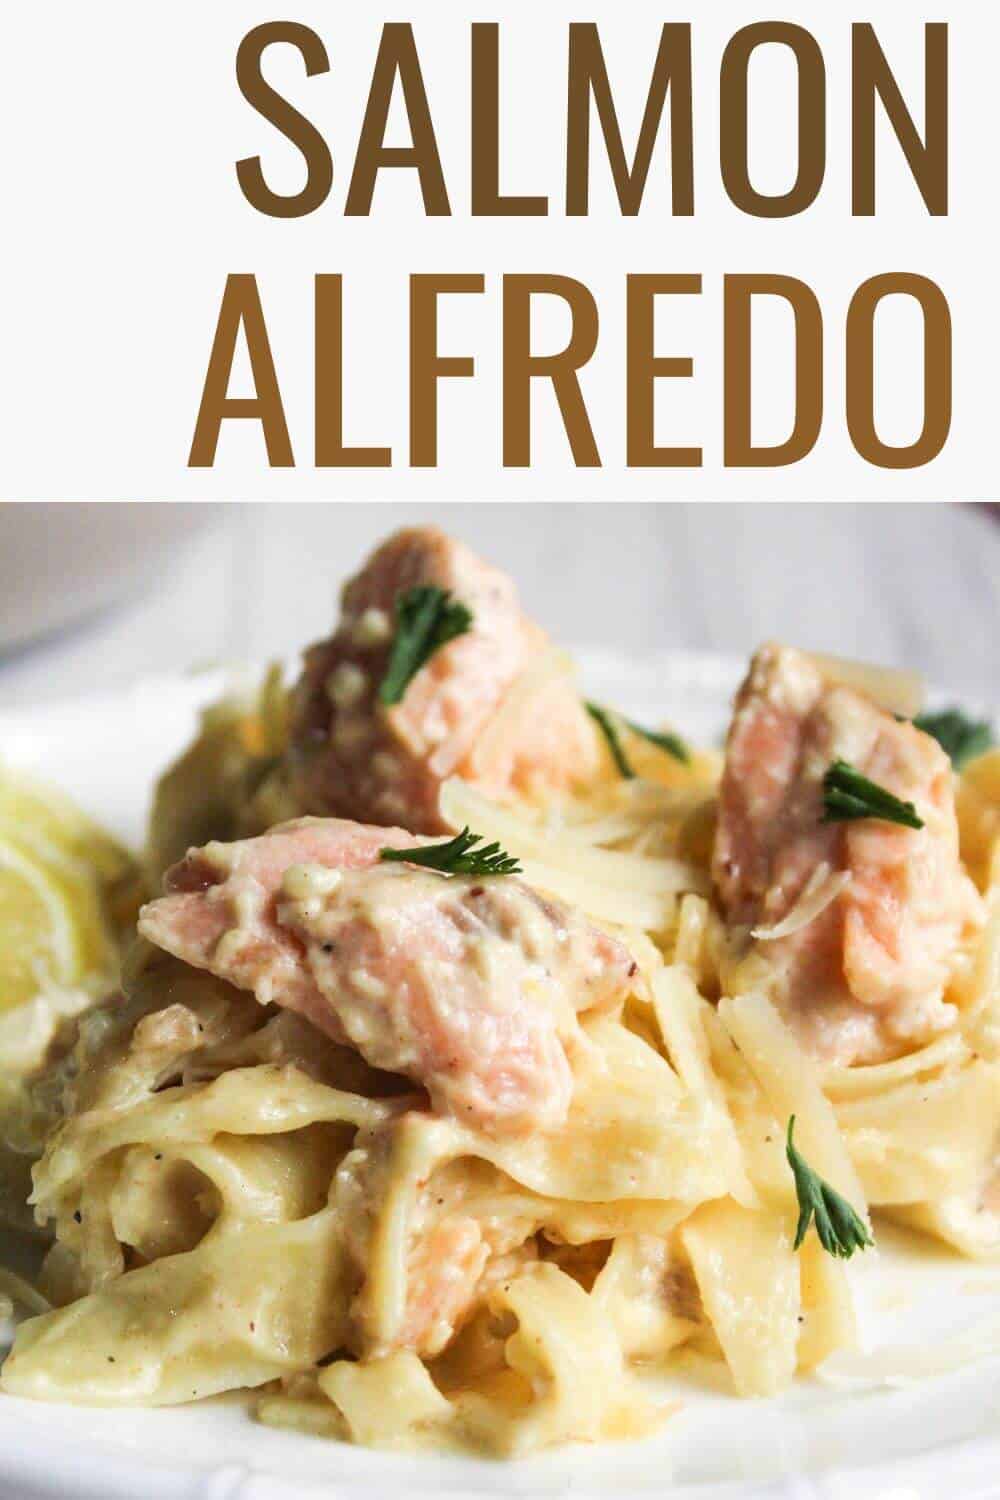 Salmon alfredo pasta with text overlay.